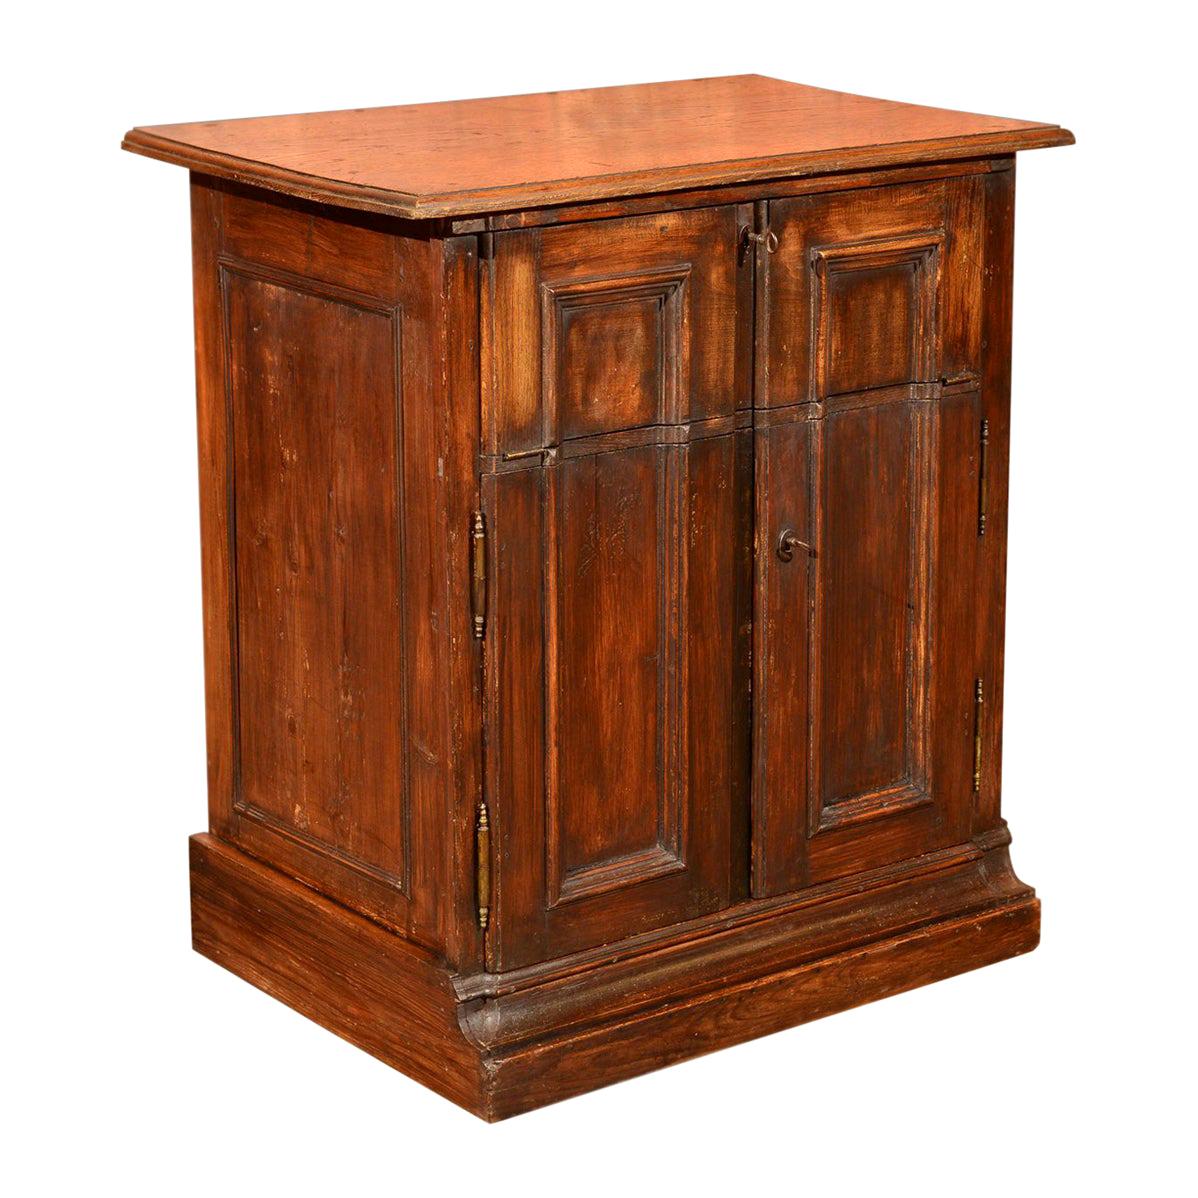 Antique Specimen Cabinet, French Oak Cupboard, Secretaire, Desk, circa 1850